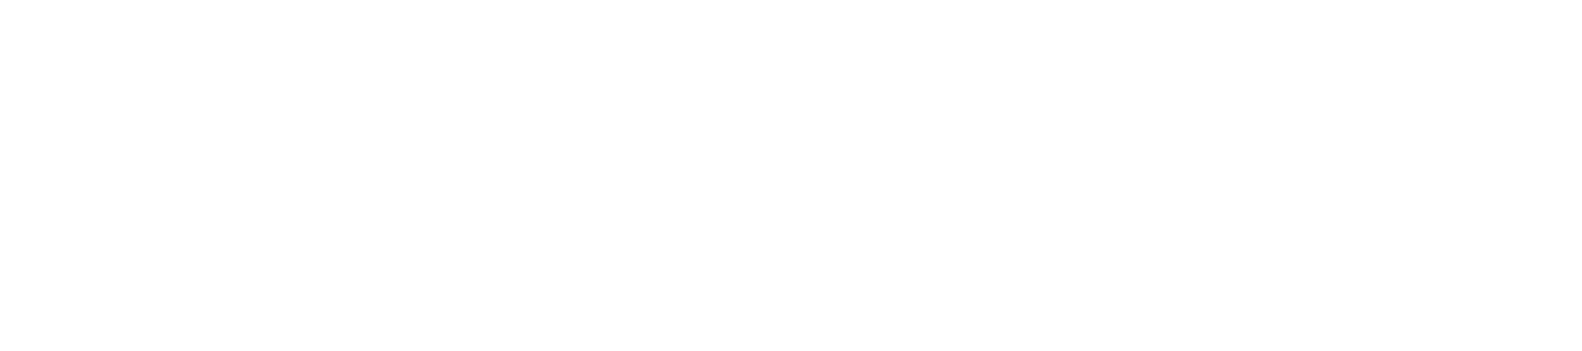 Chesapeake Energy
 logo large for dark backgrounds (transparent PNG)